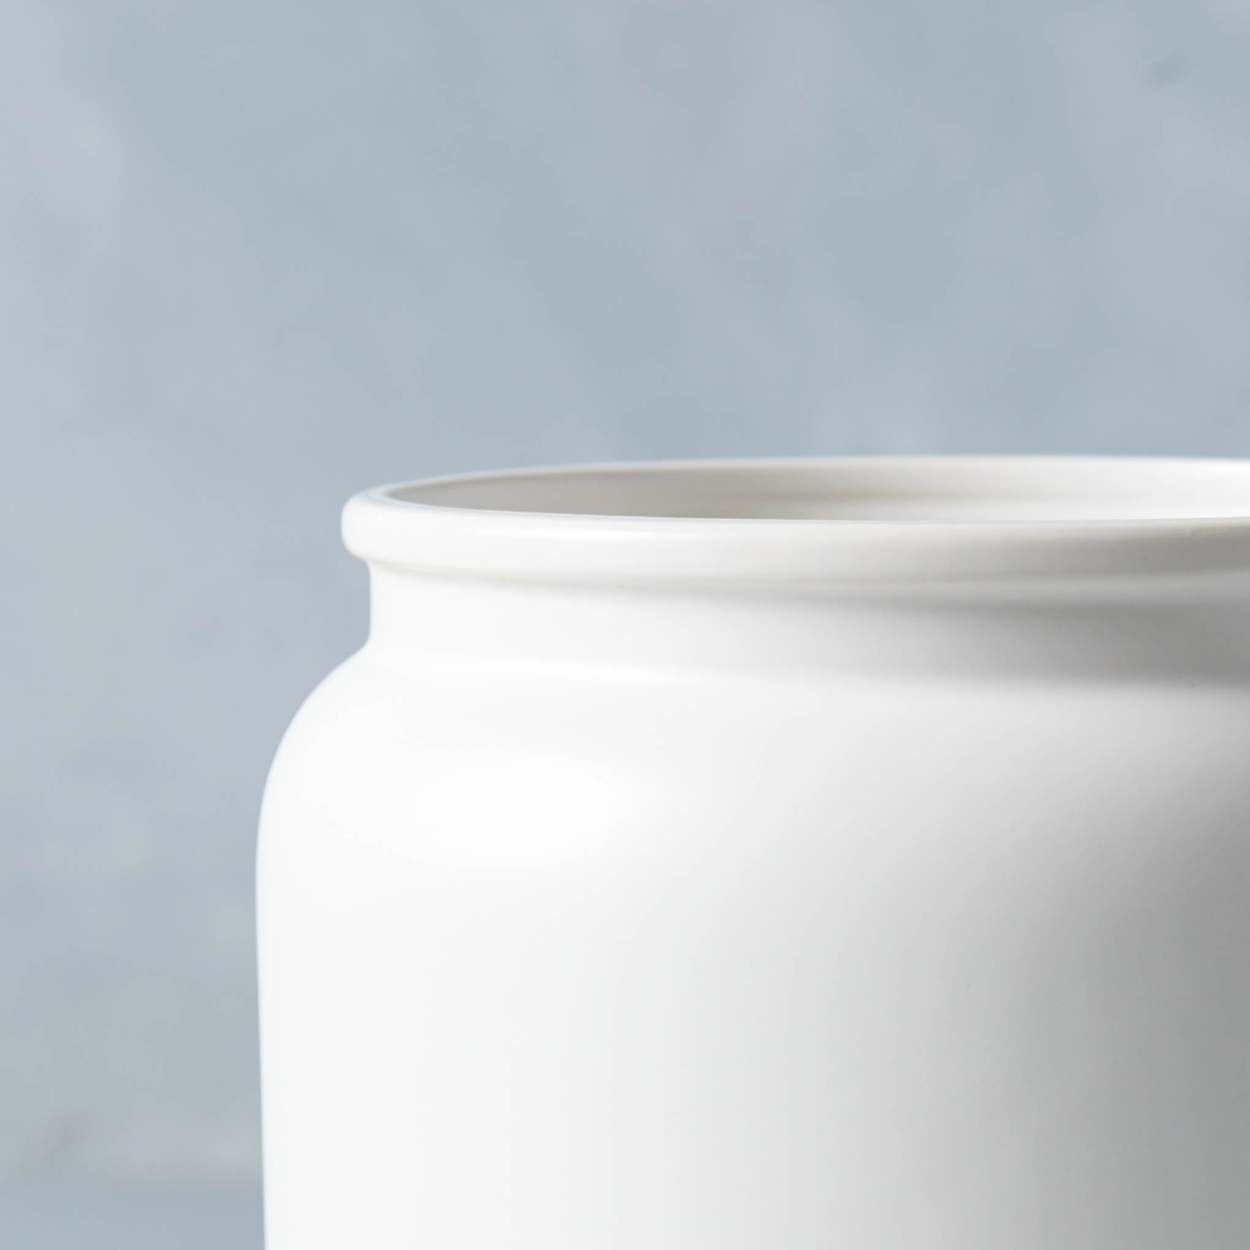 White Ceramic Creamer Jar + Reviews